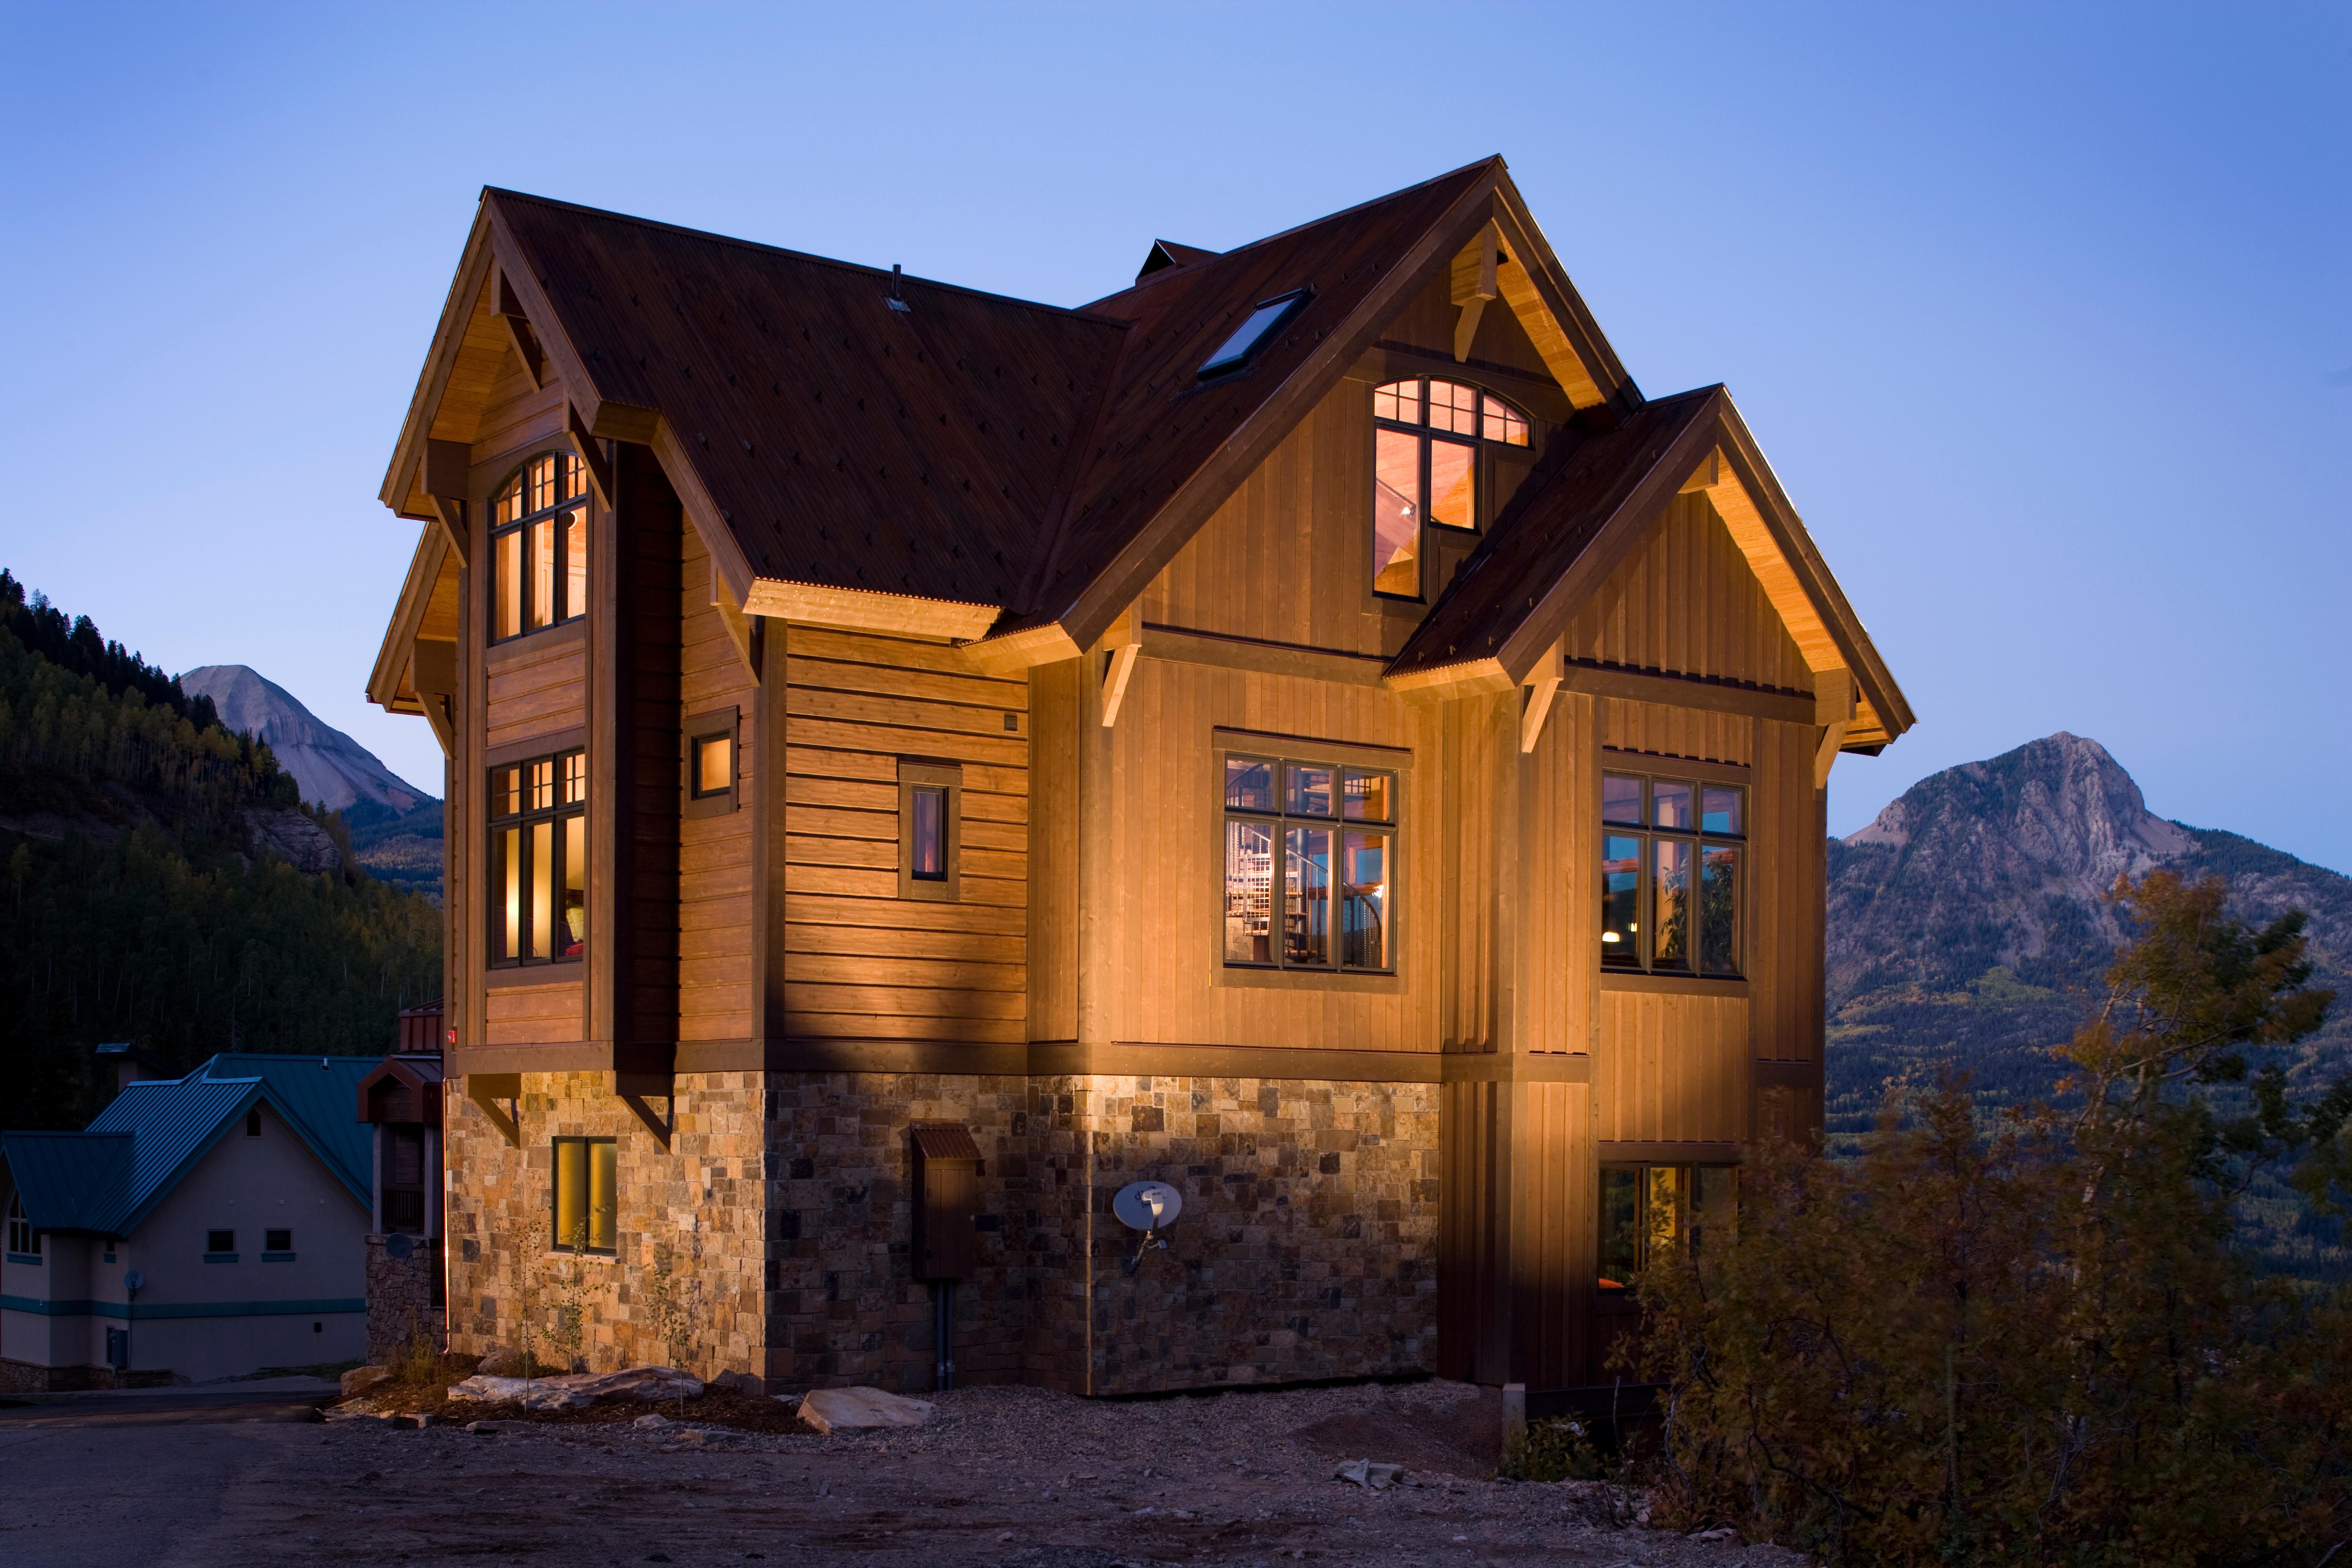 Durango, Colorado vacation rental home with amazing mountain views located at Purgatory Resort